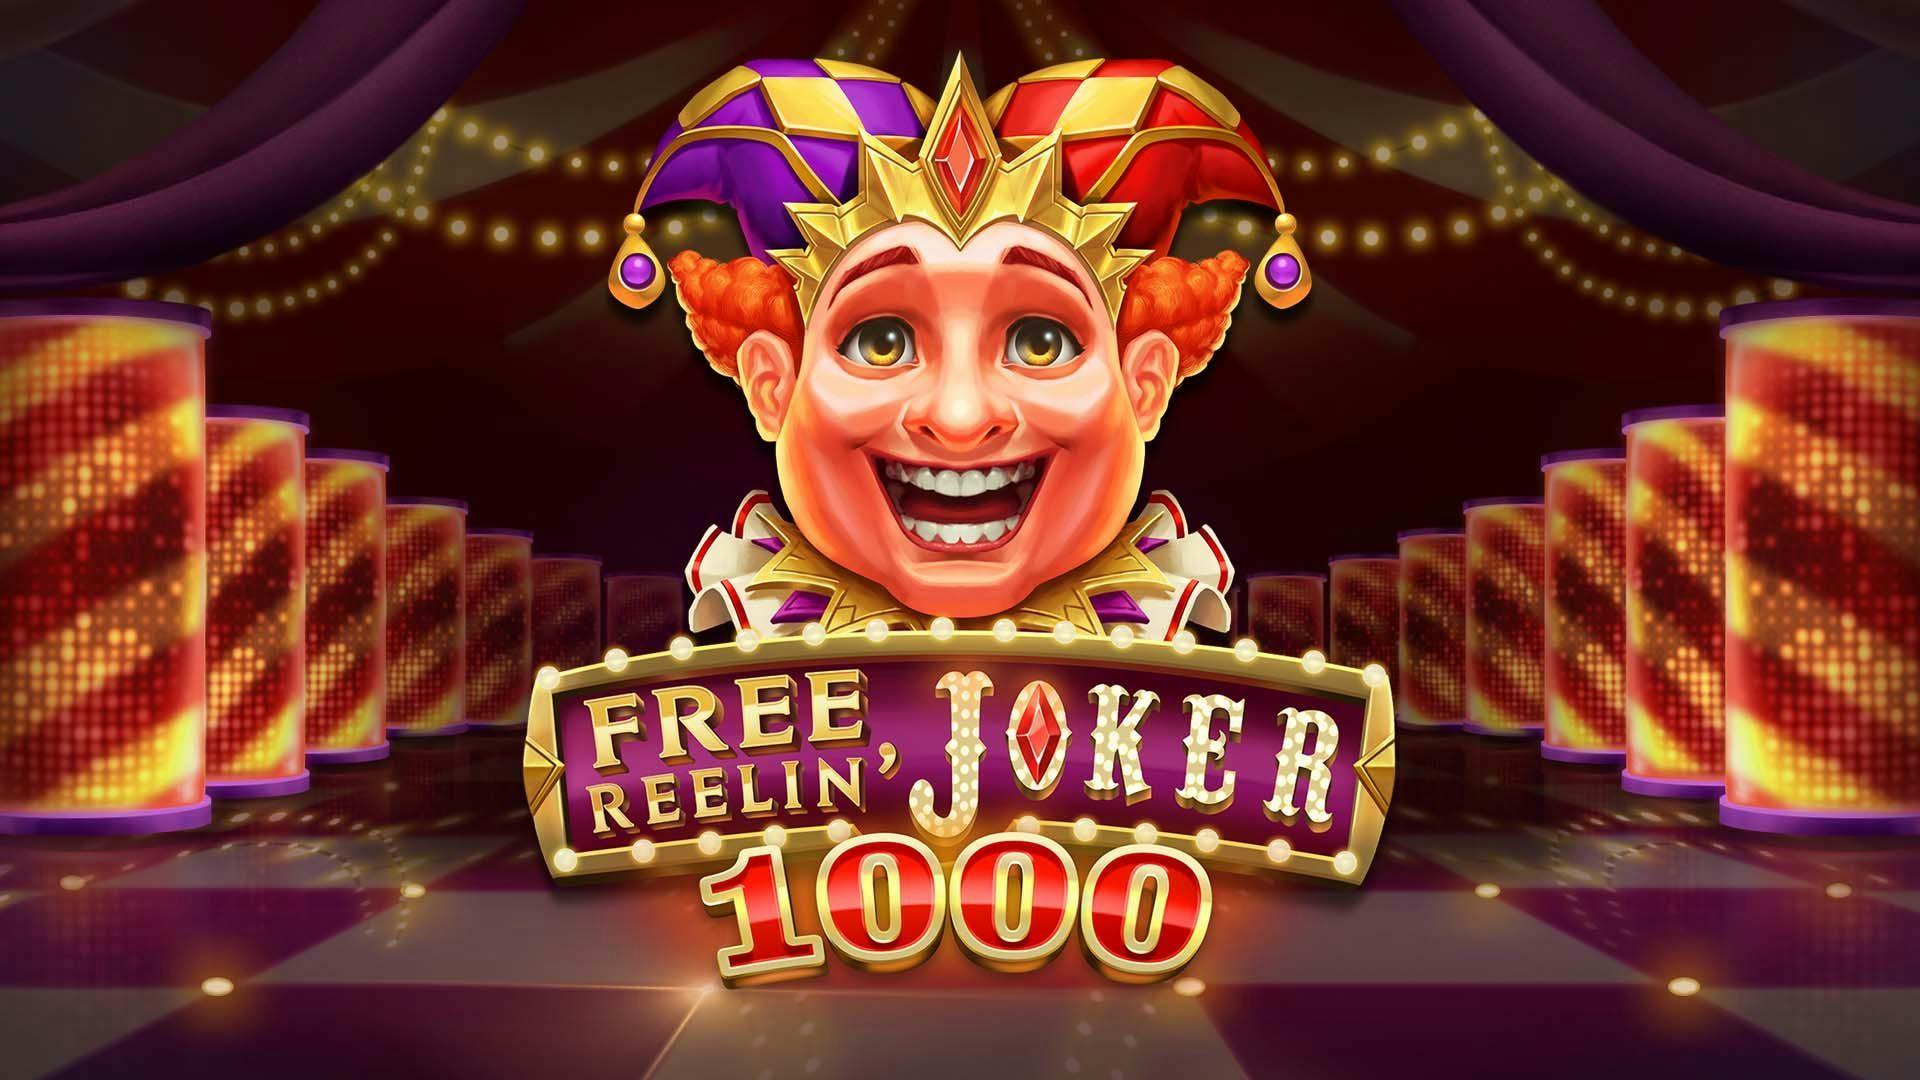 Free Reelin' Joker 1000 Slot Machine Online Free Game Play